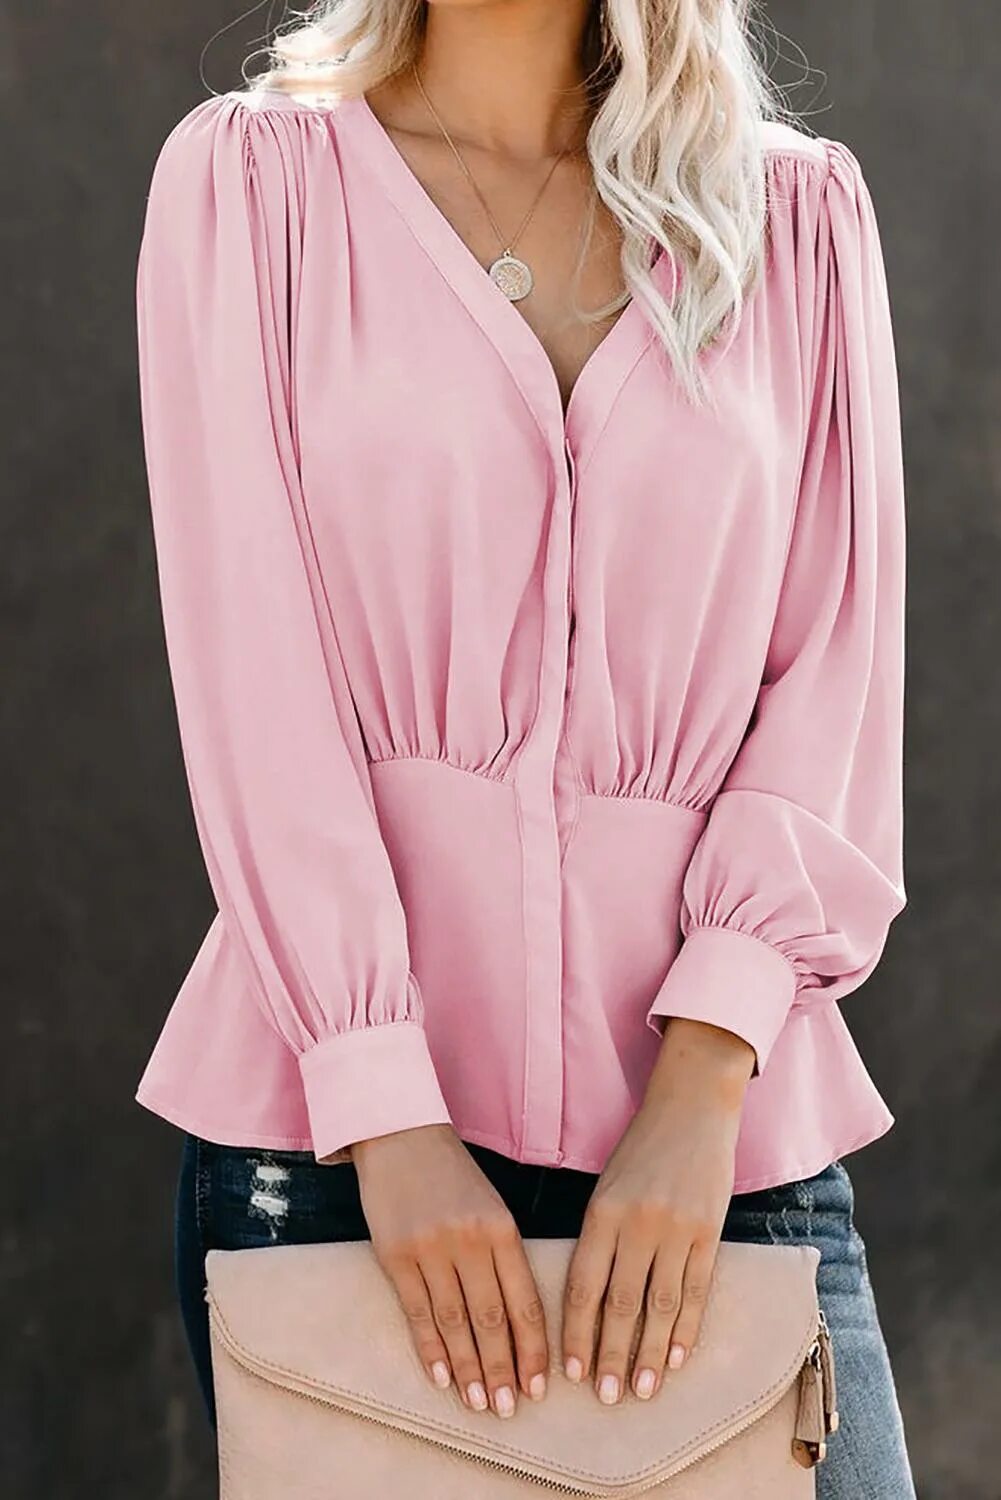 Женские блузки розовые. Кофта розовая женская. Красивая розовая блузка. Розовая блузка женская. Нежно розовая блузка.